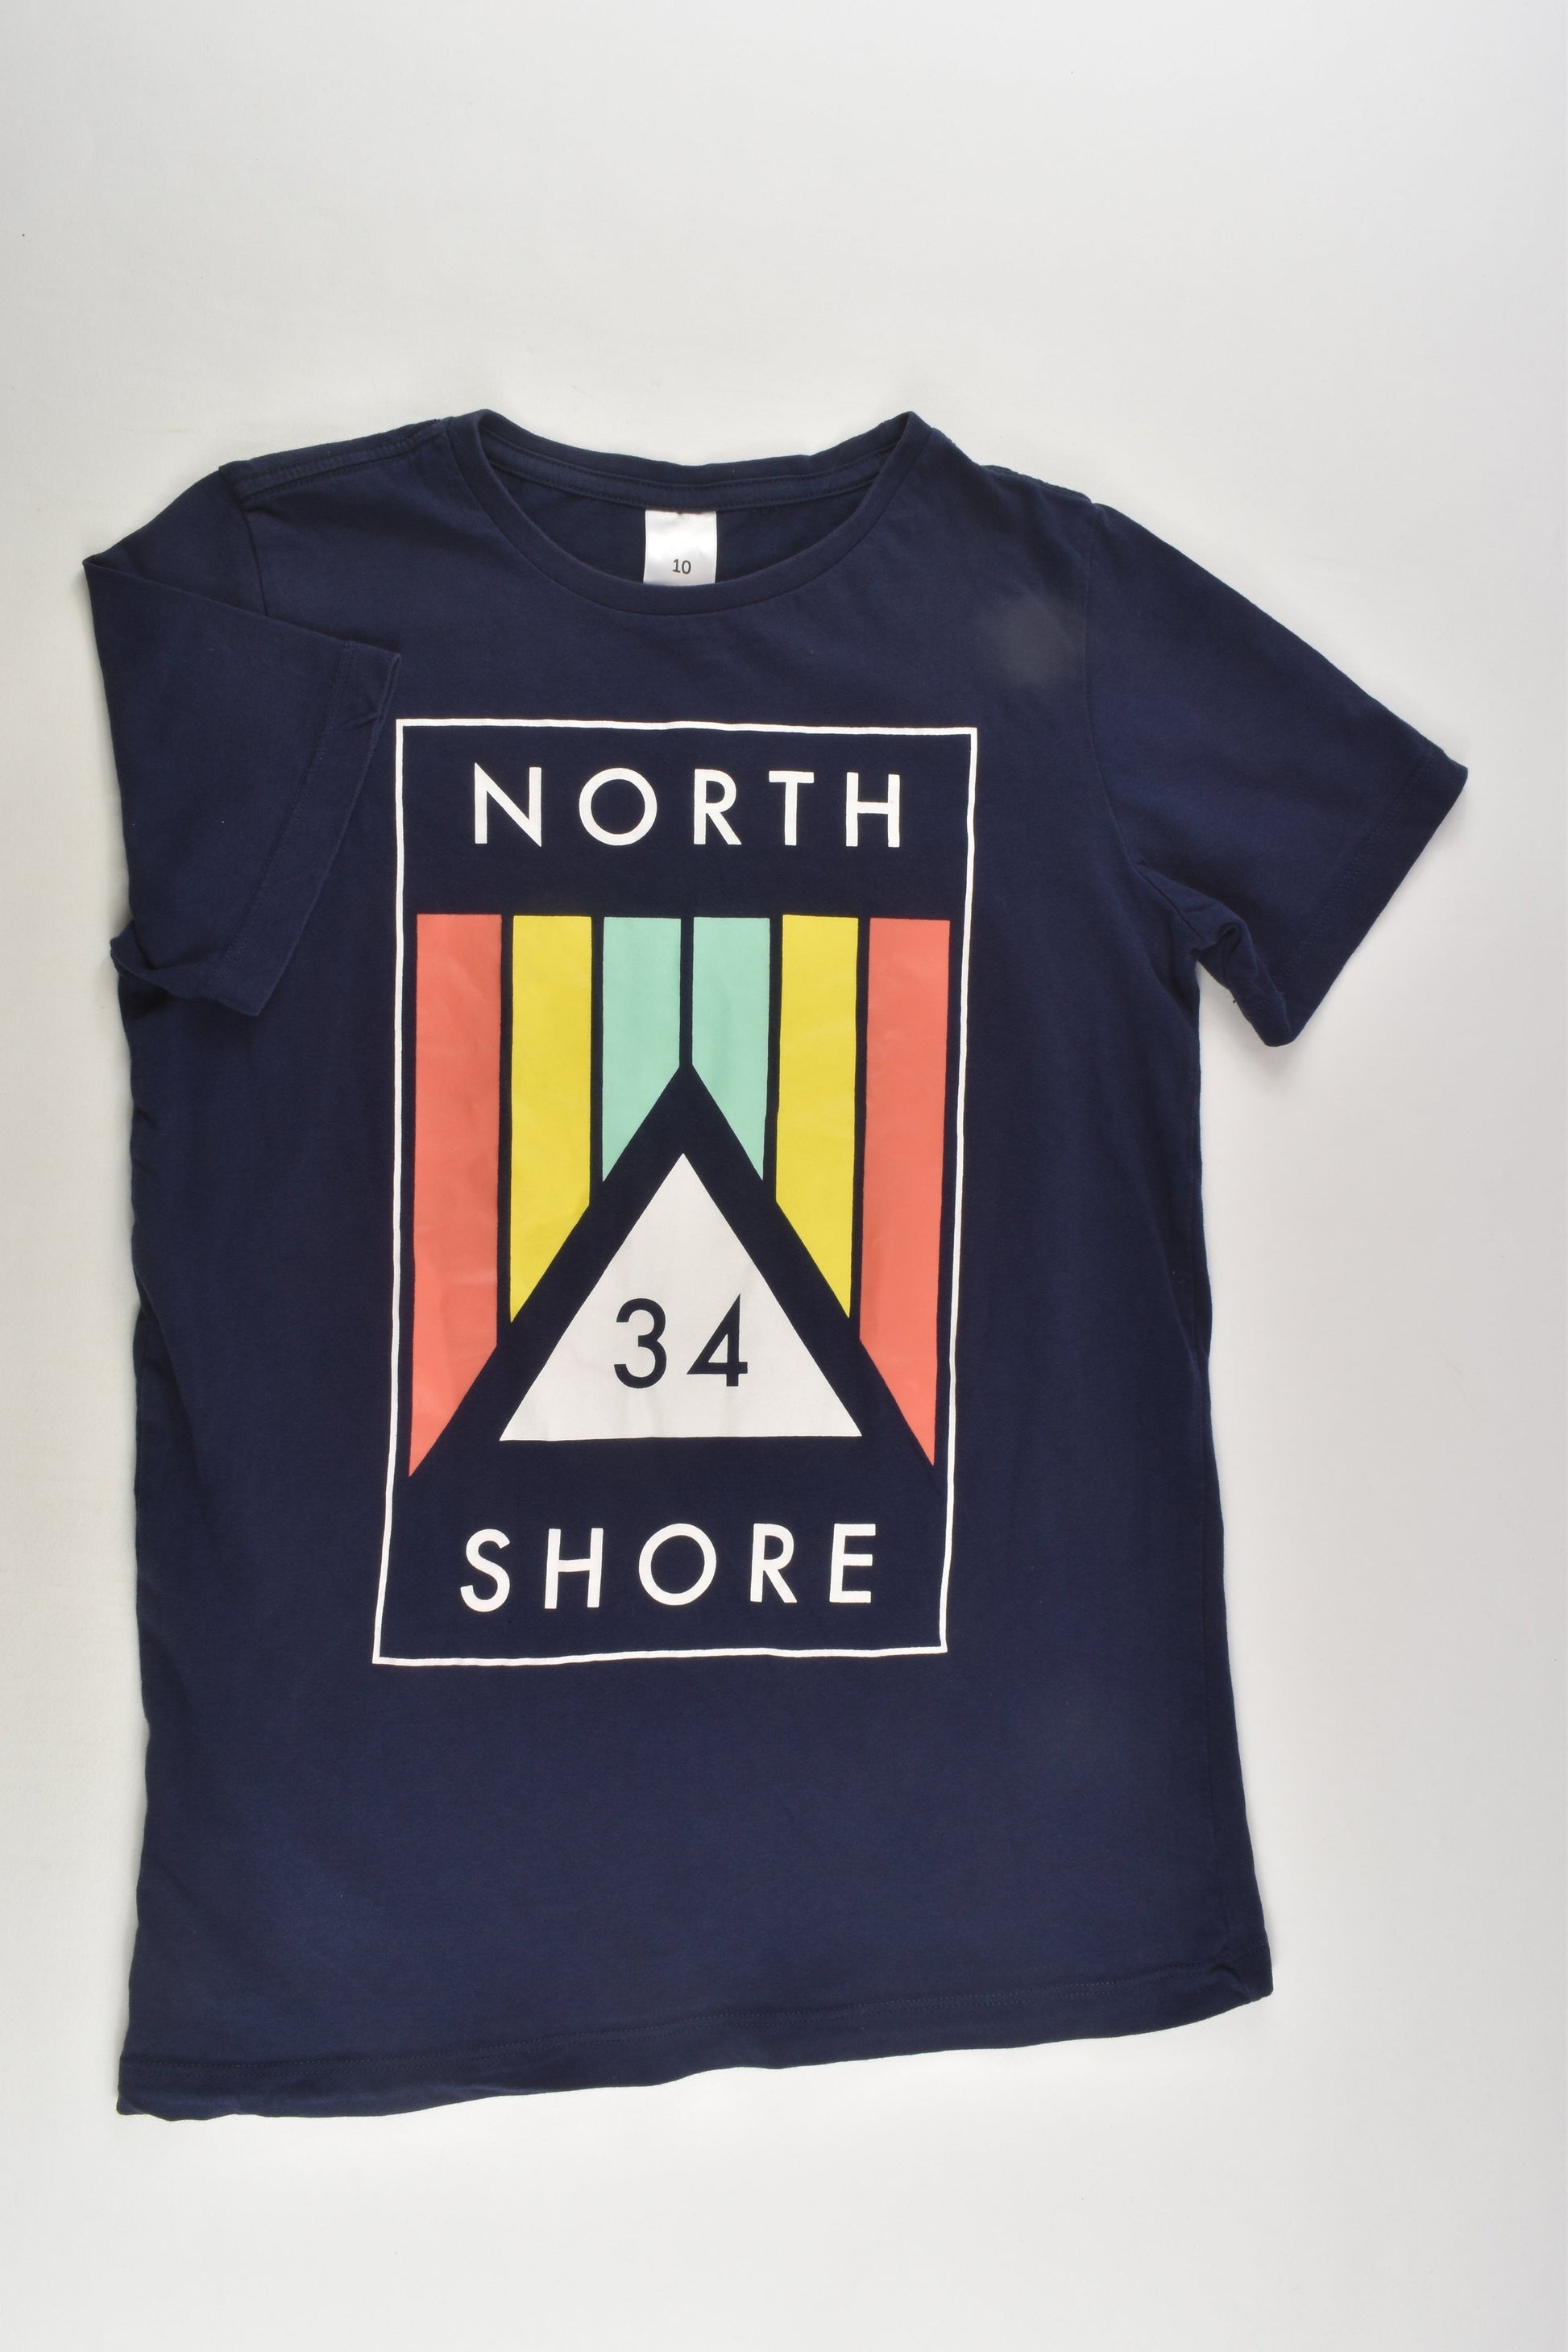 Target Size 10 'North Shore' T-shirt